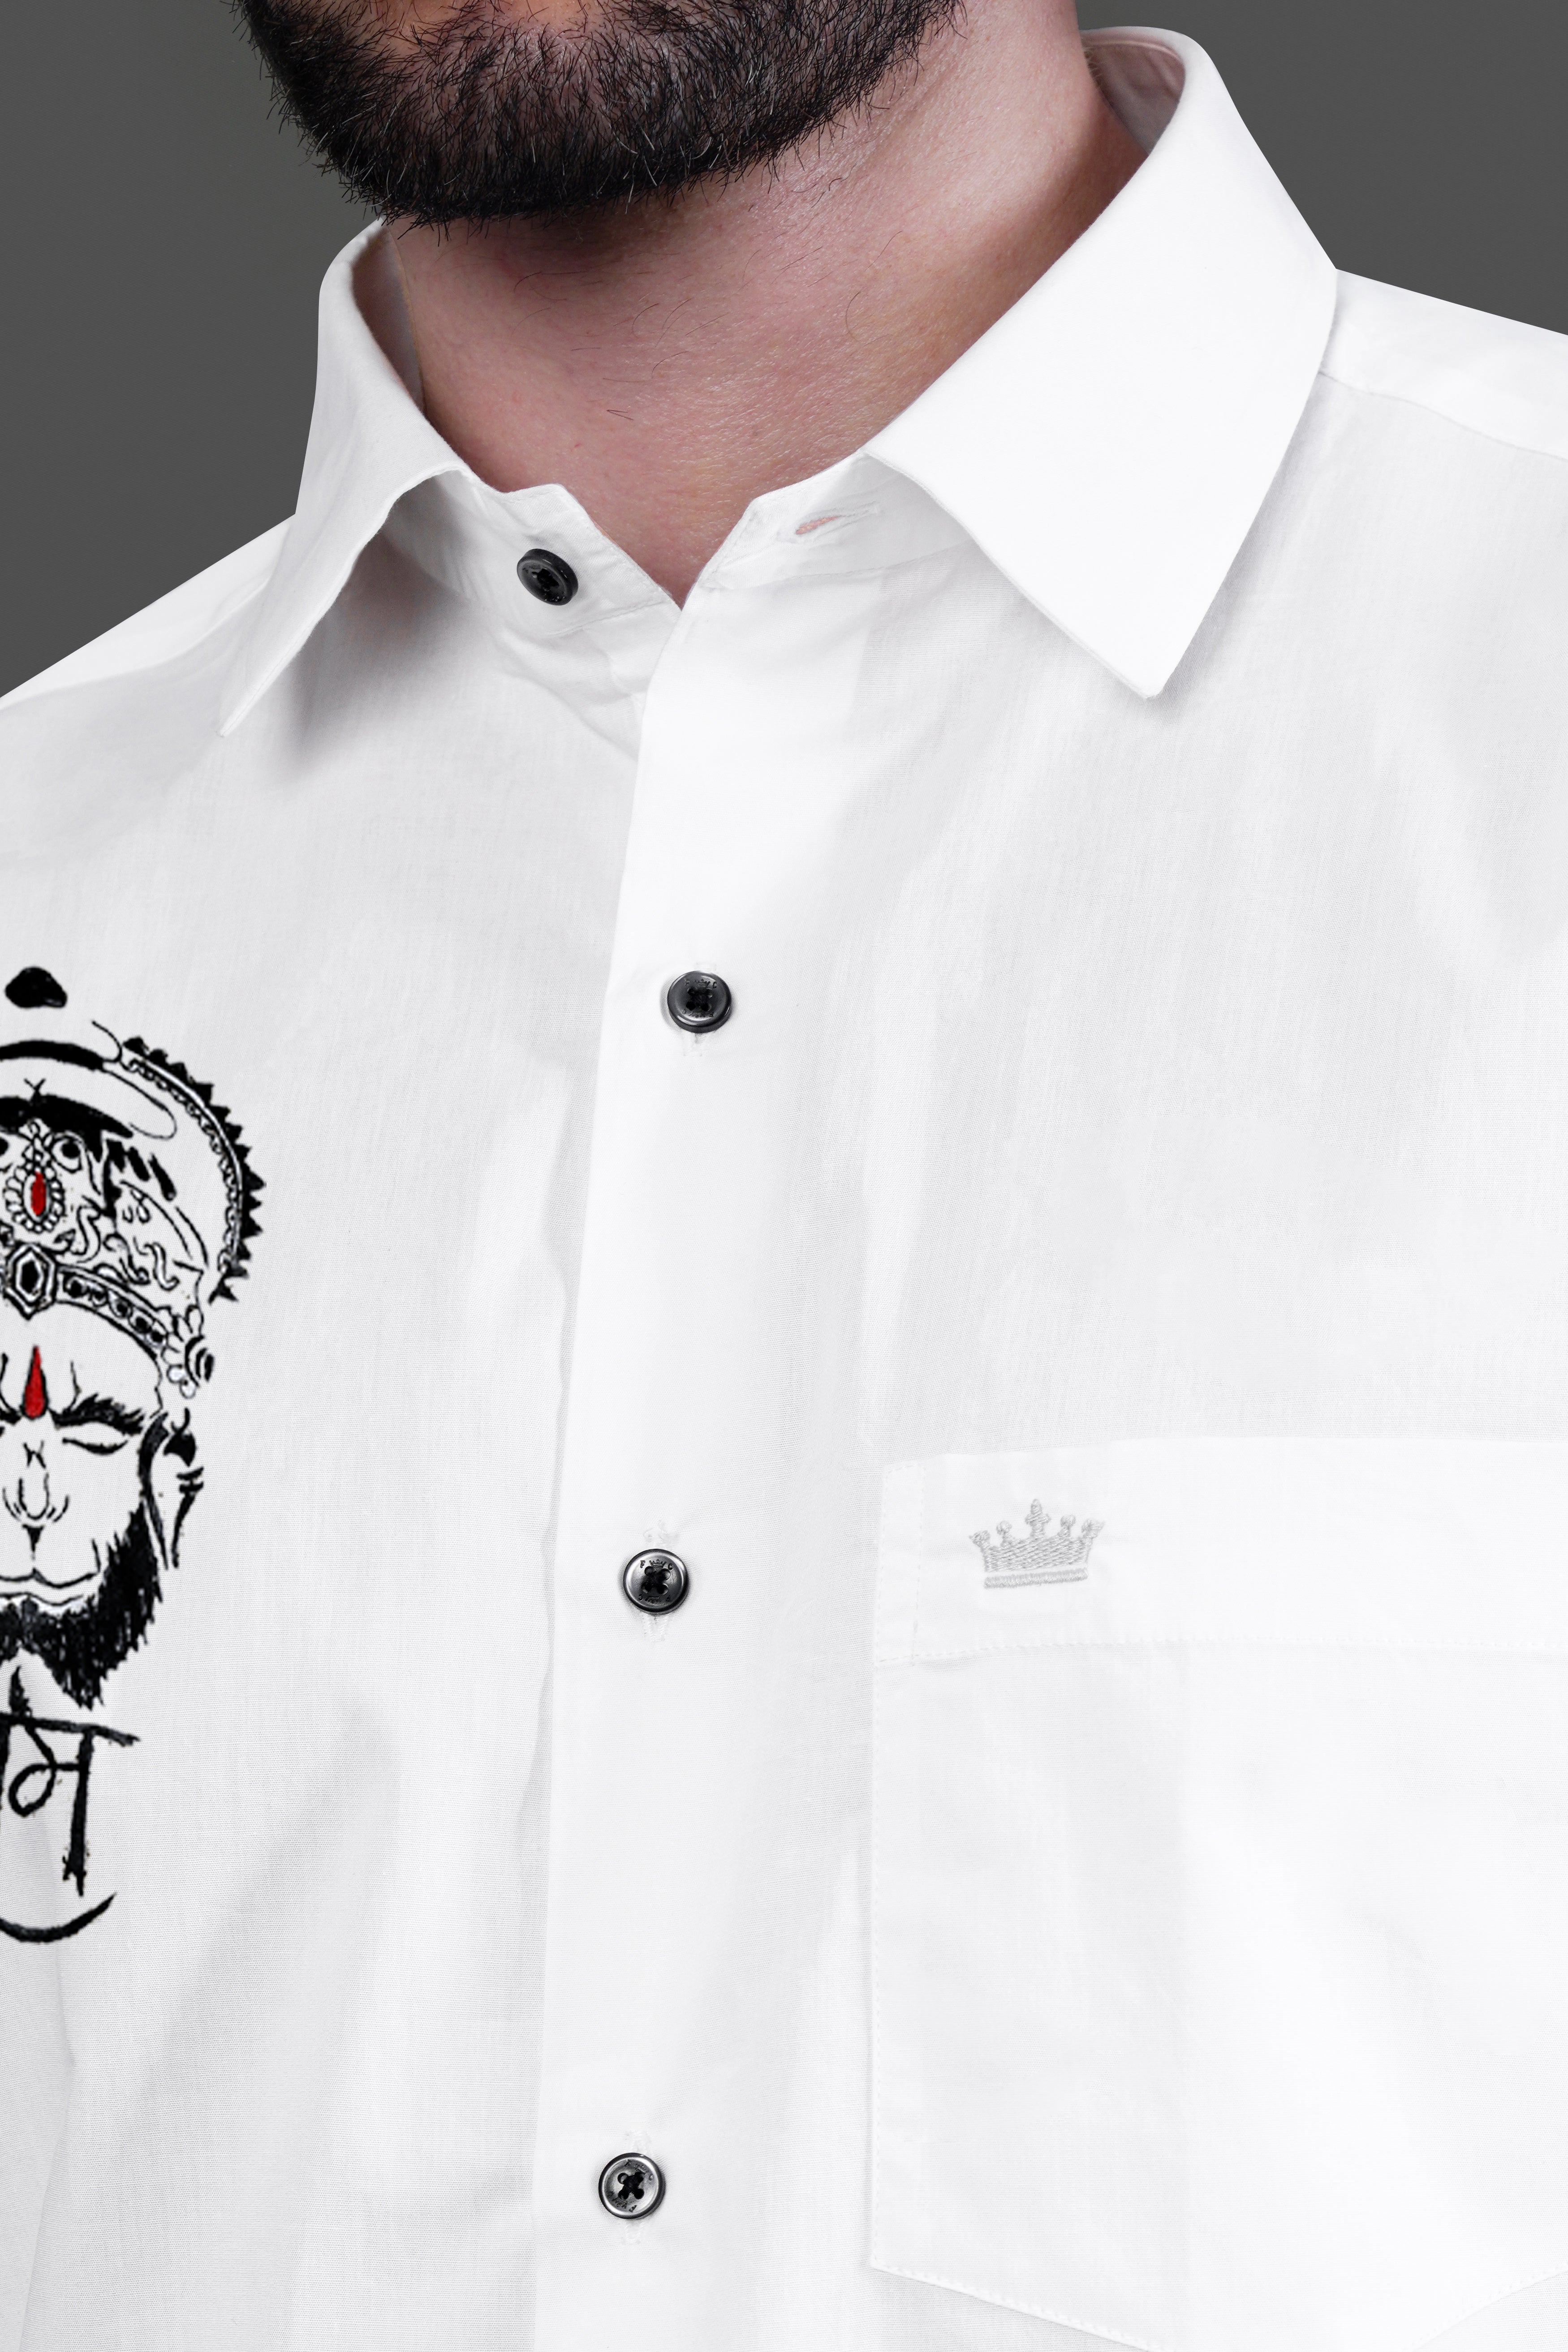 Bright White Lord Hanuman Hand Painted Premium Cotton Designer Shirt